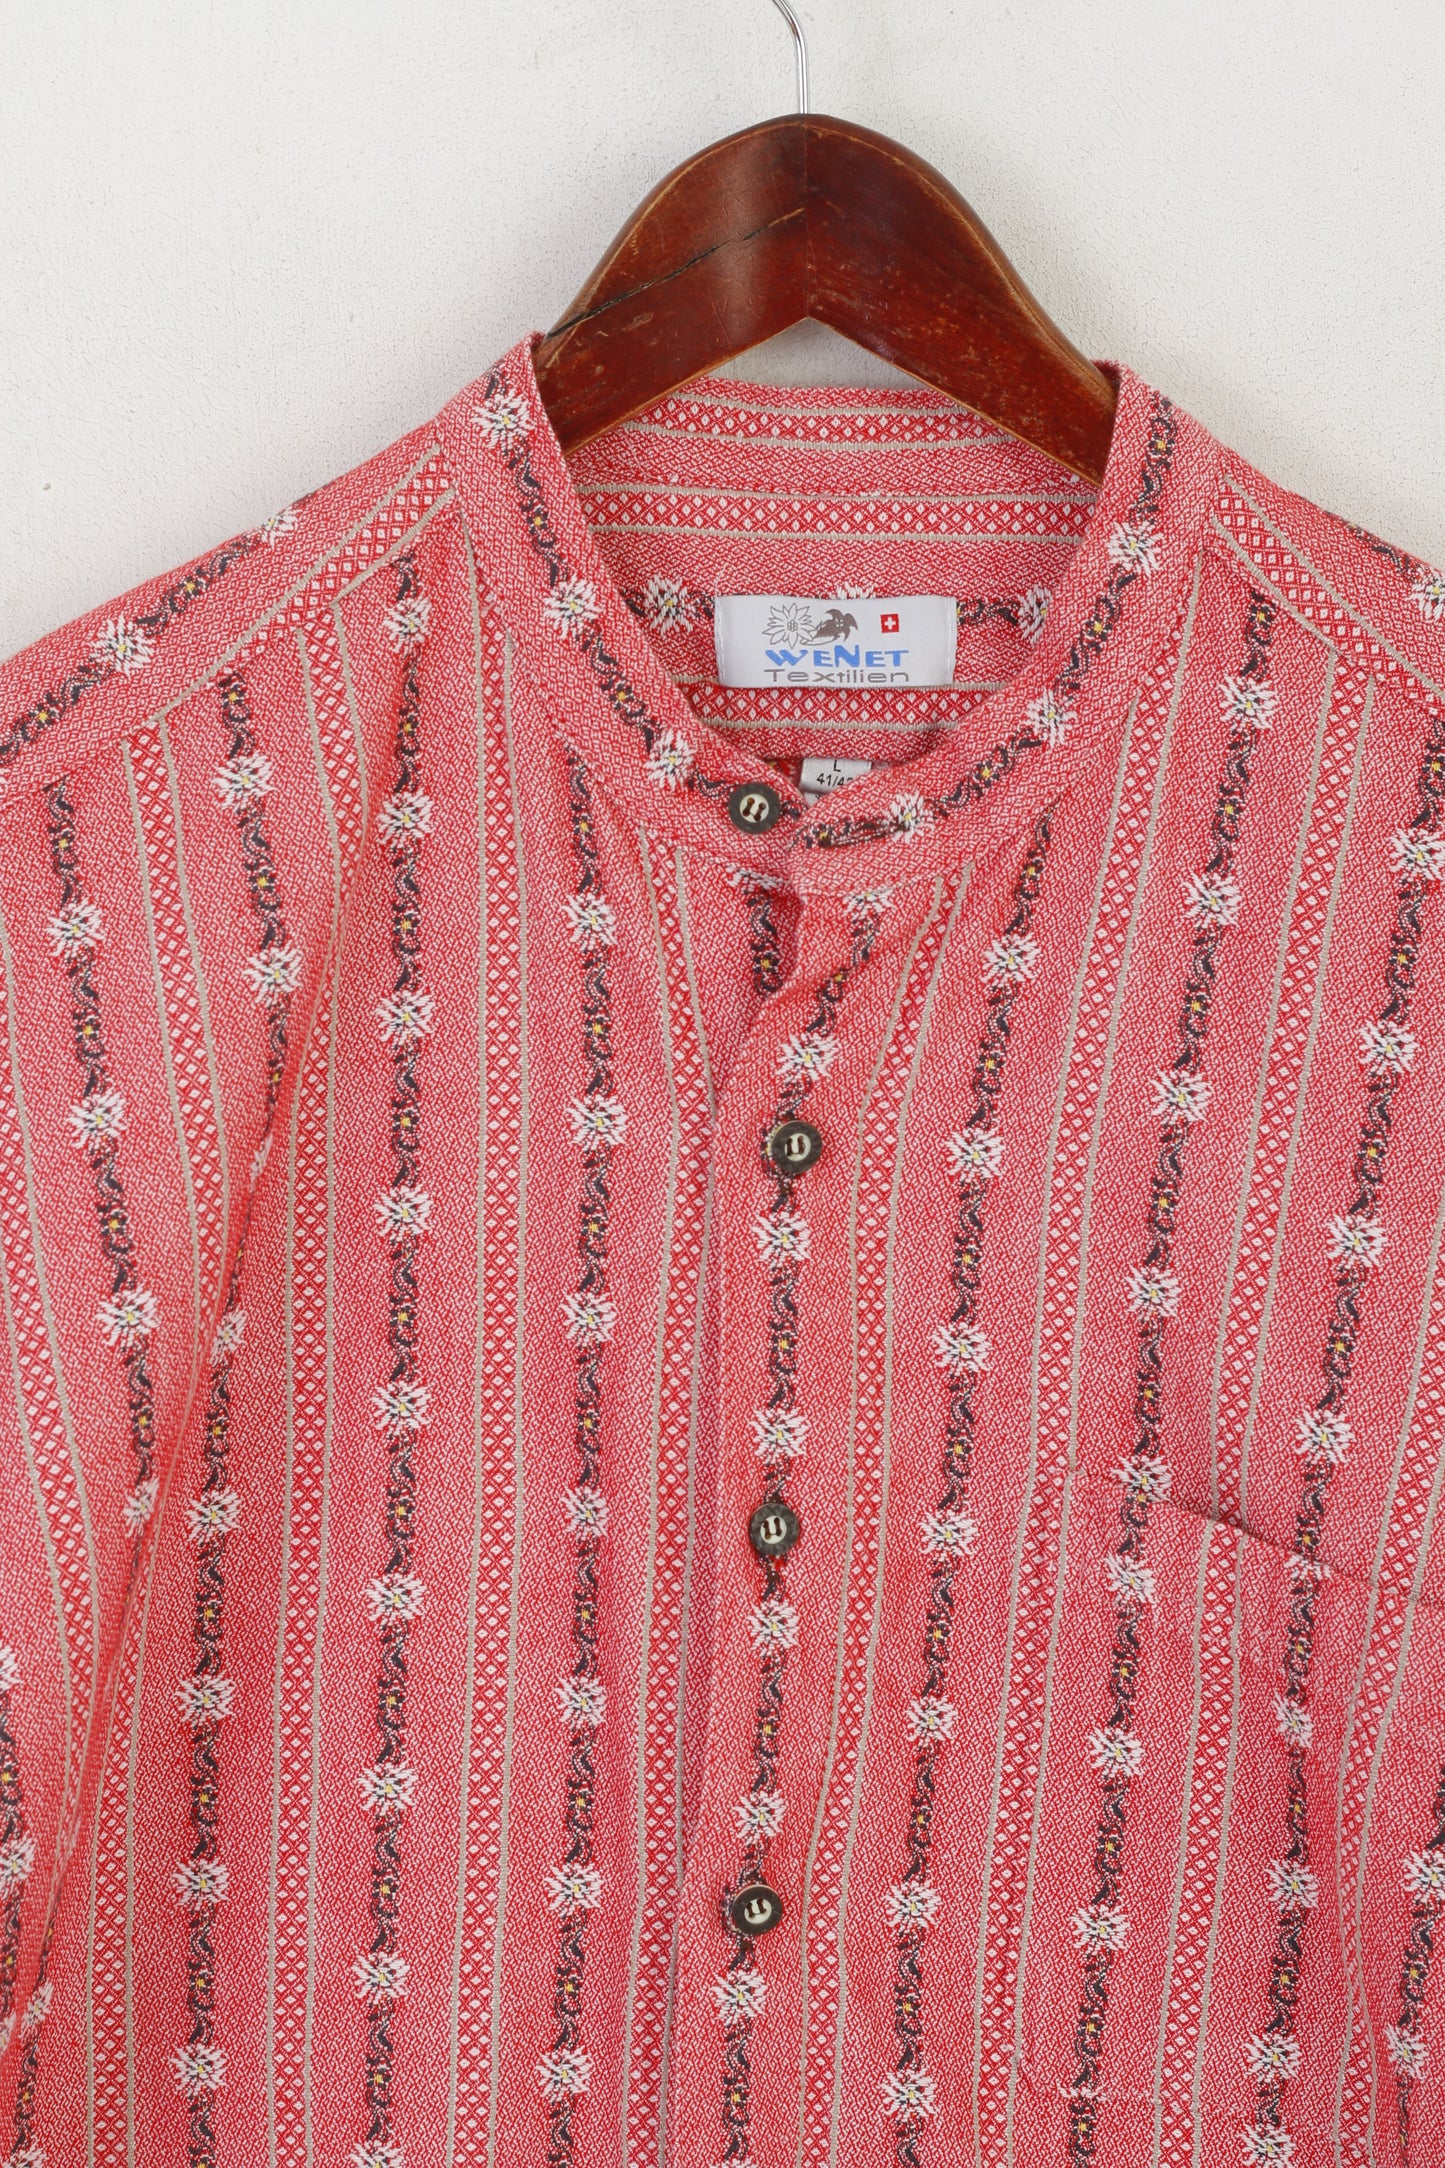 Wenet Textilien Men L Casual Shirt Pink Cotton Emroidered Floral Tyrol Trachten Top